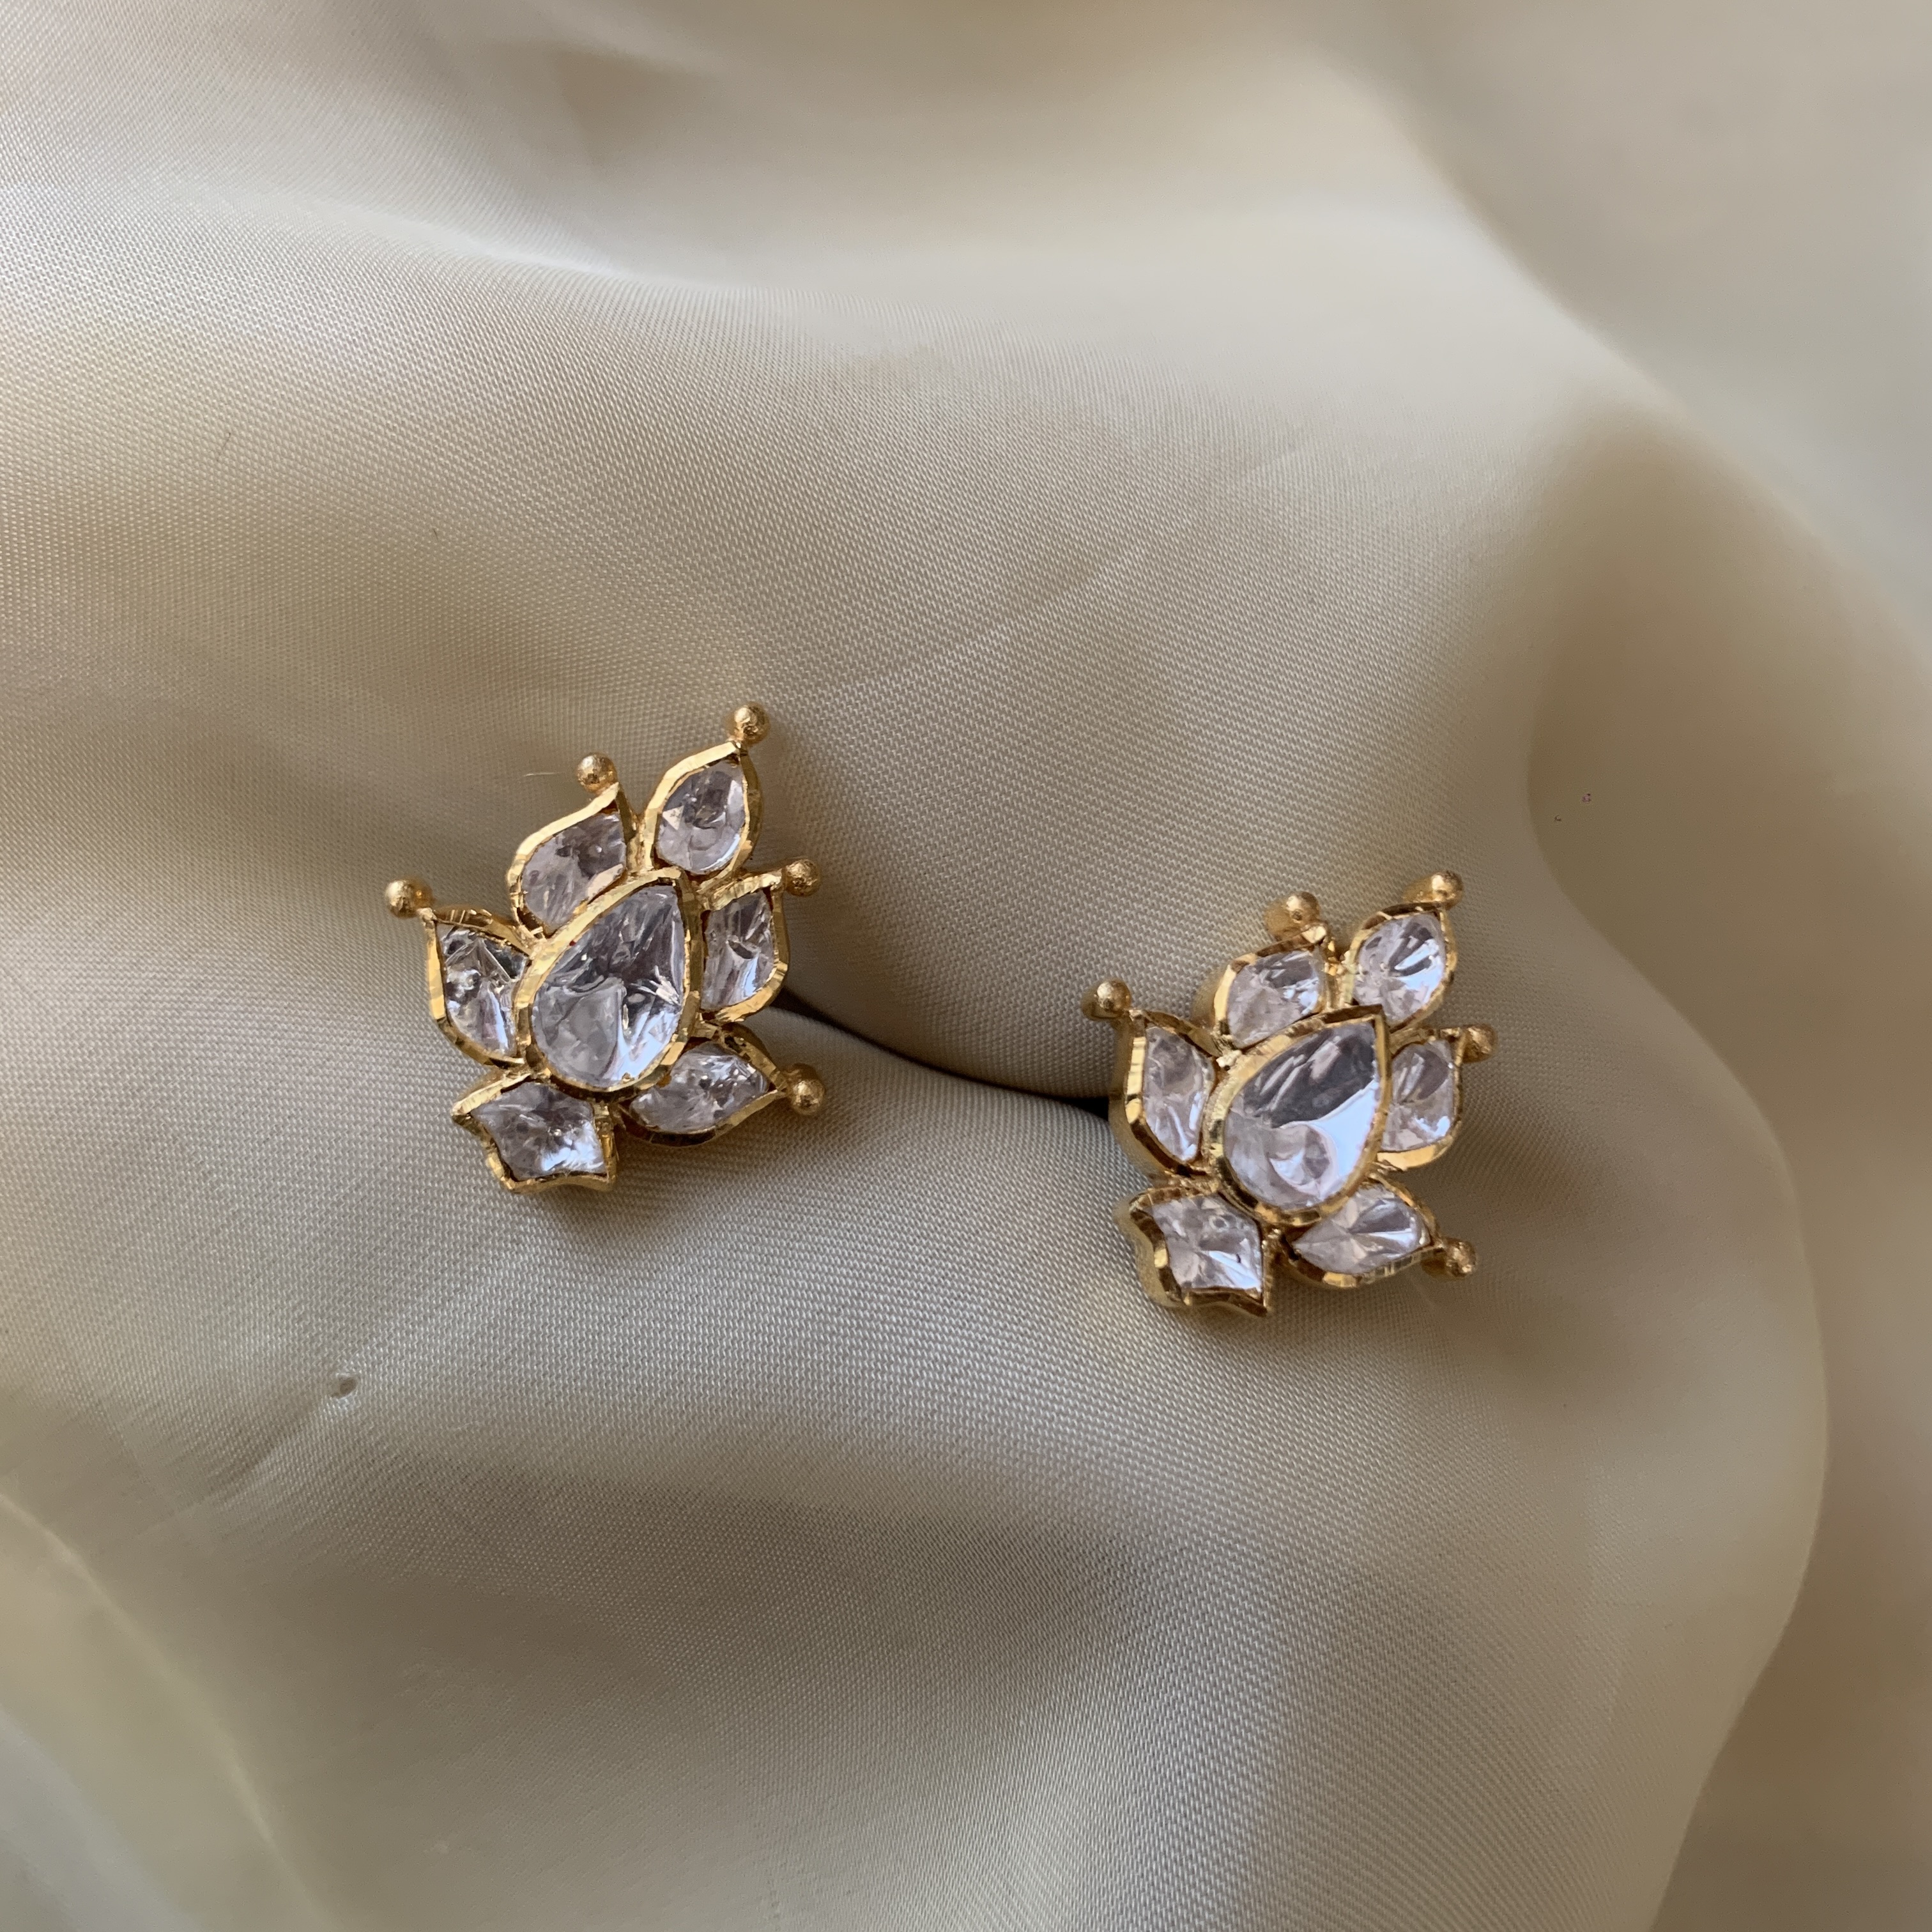 Bezel-Set Genuine Gemstone Stud Earrings in White, Yellow or Rose Gold